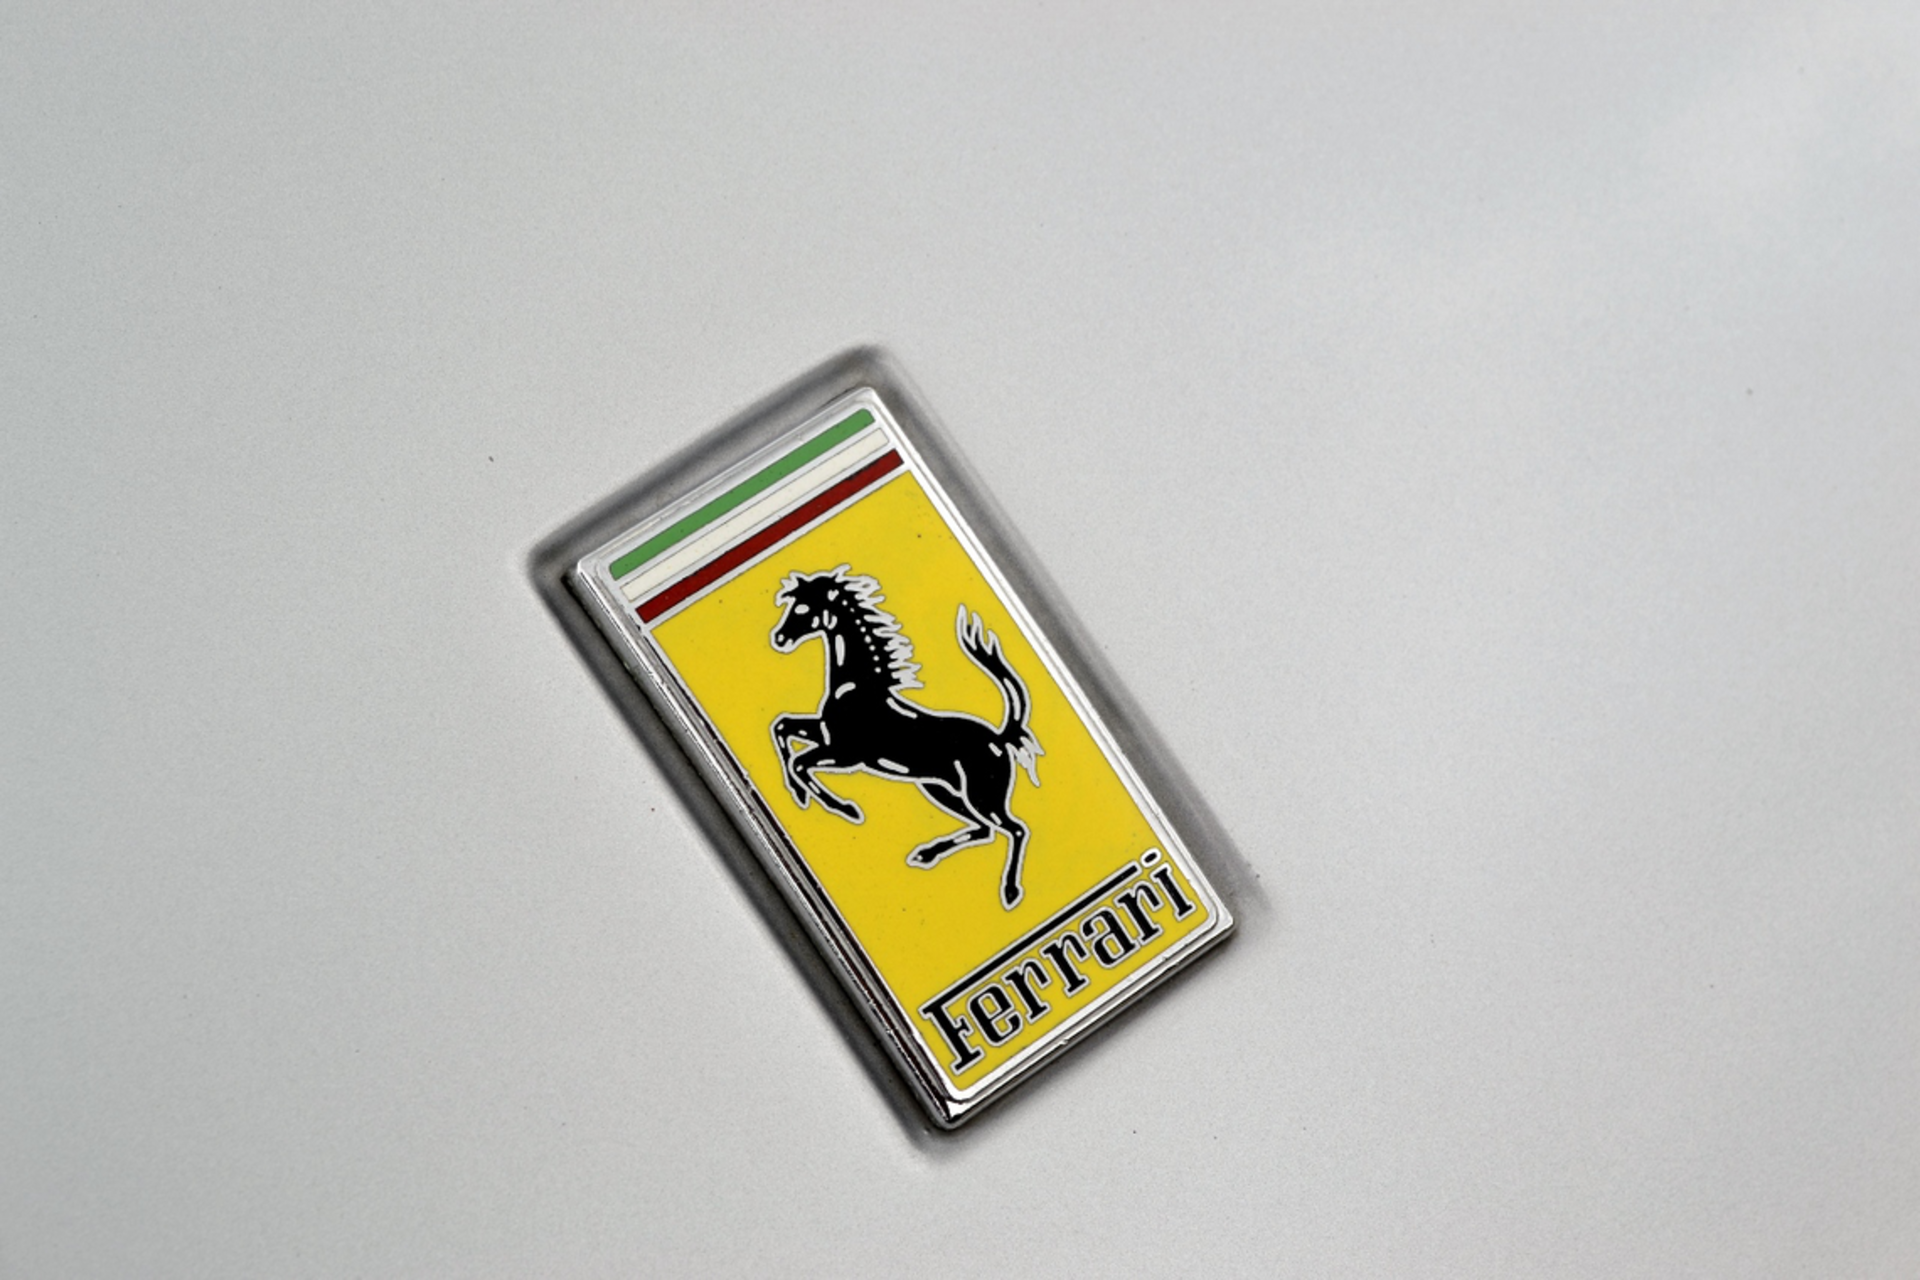 Ferrari 456 GTA - Image 10 of 19